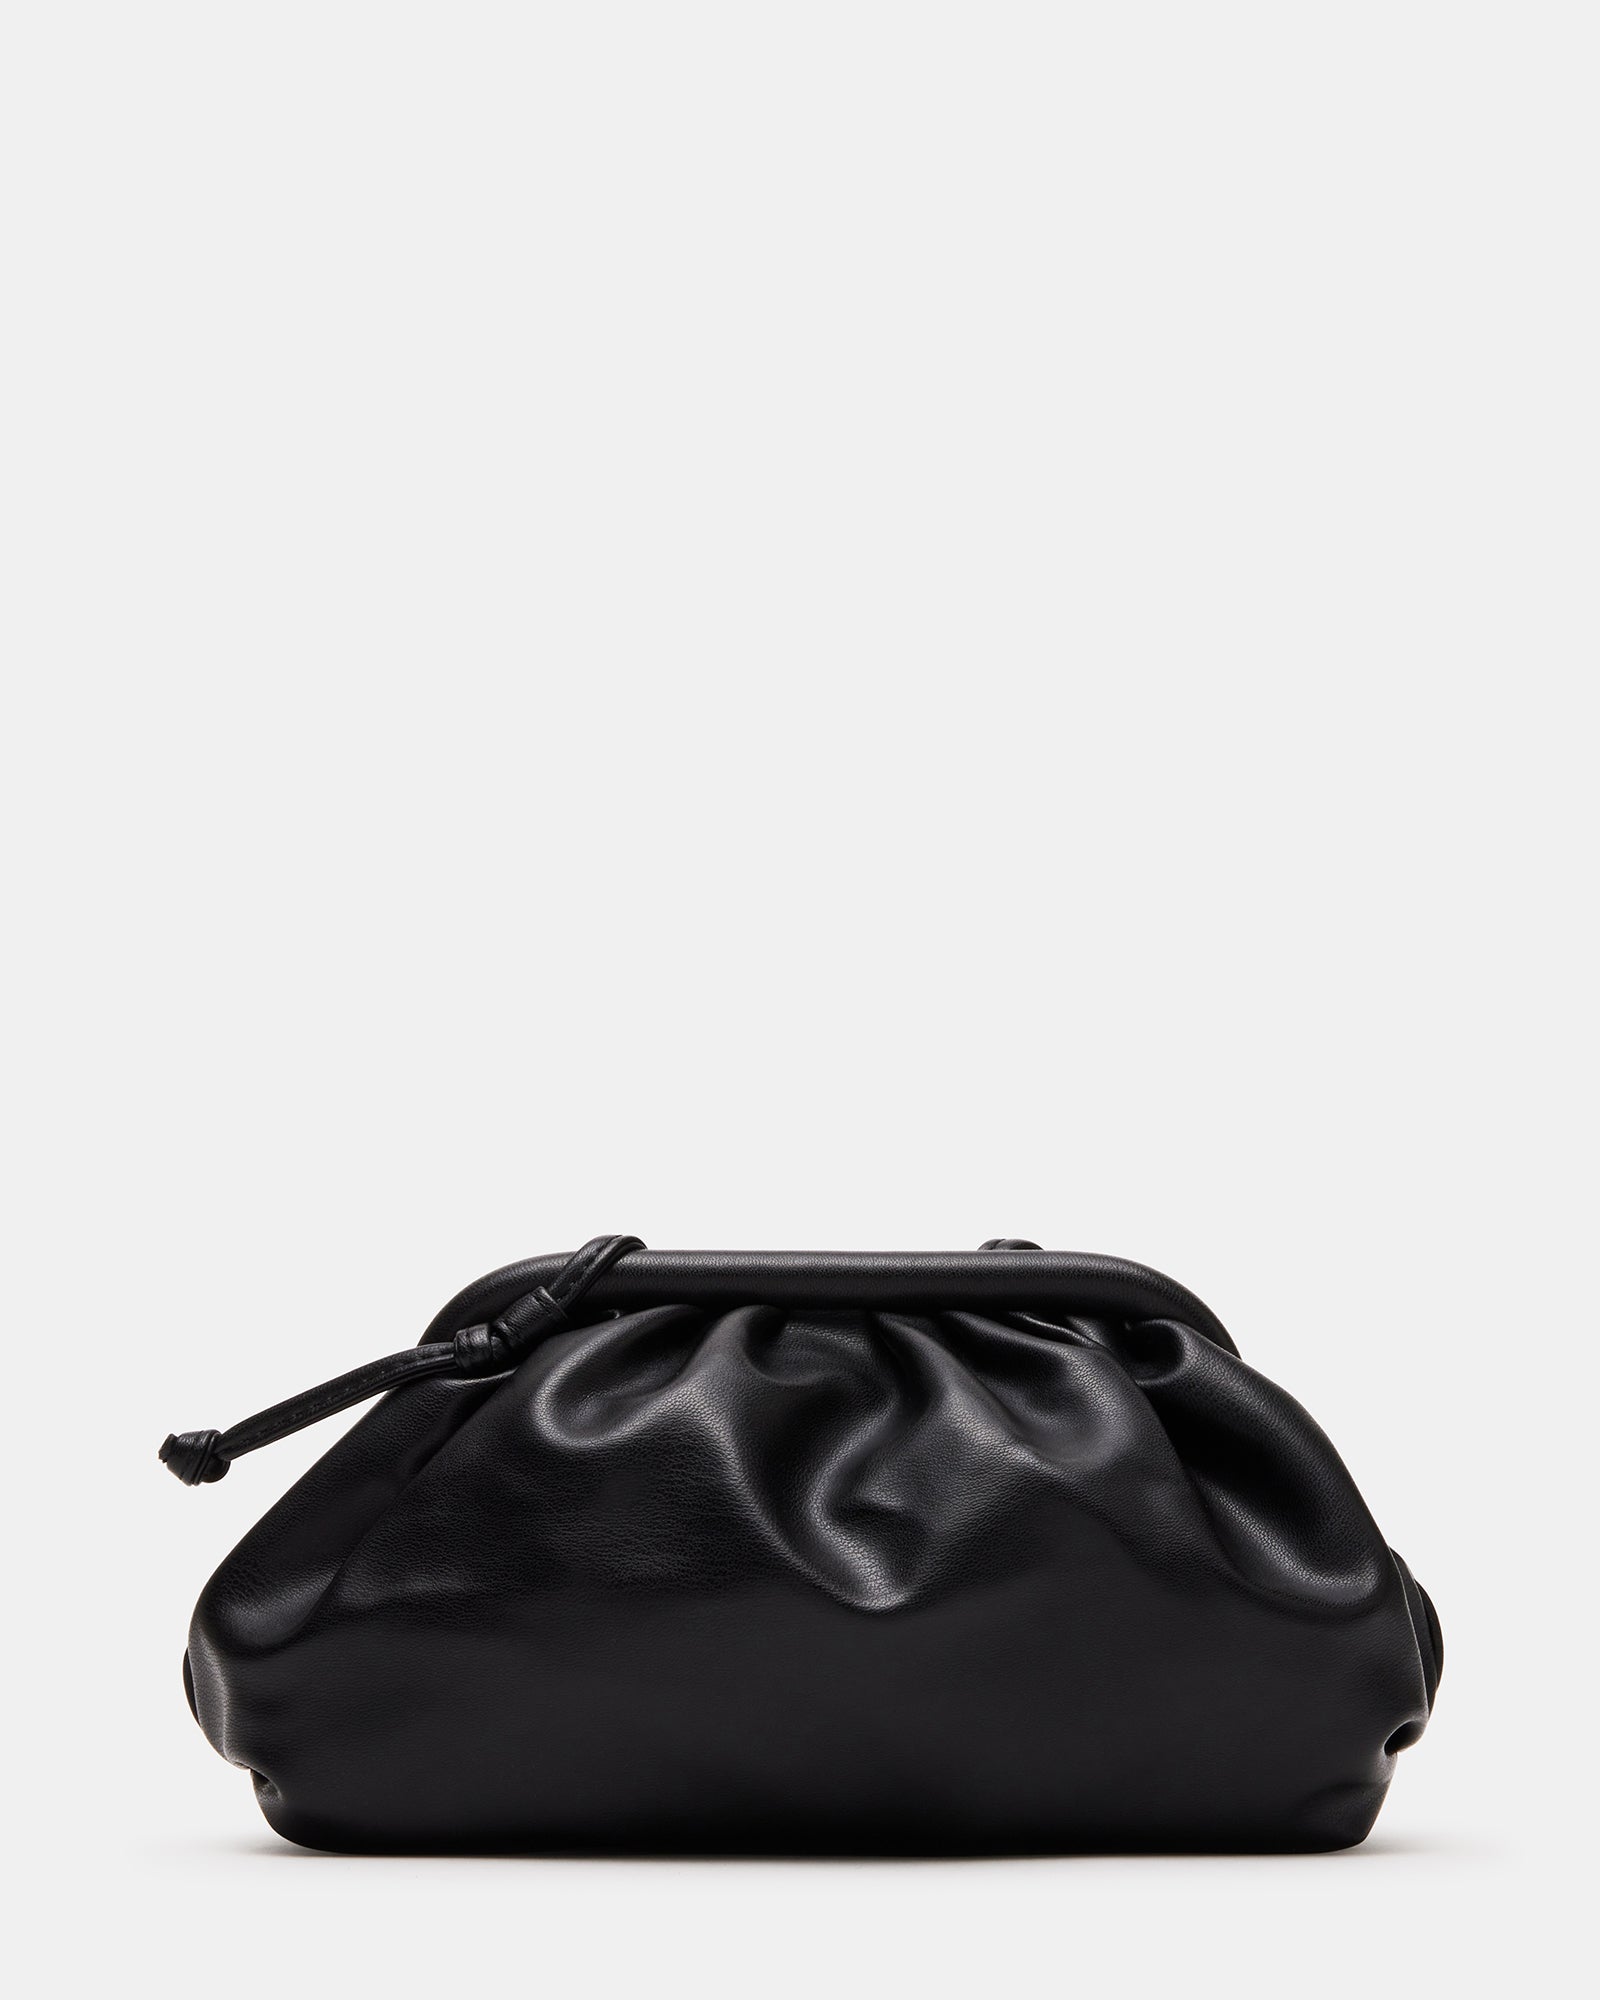 Large black and cream Steve Madden bag/purse.